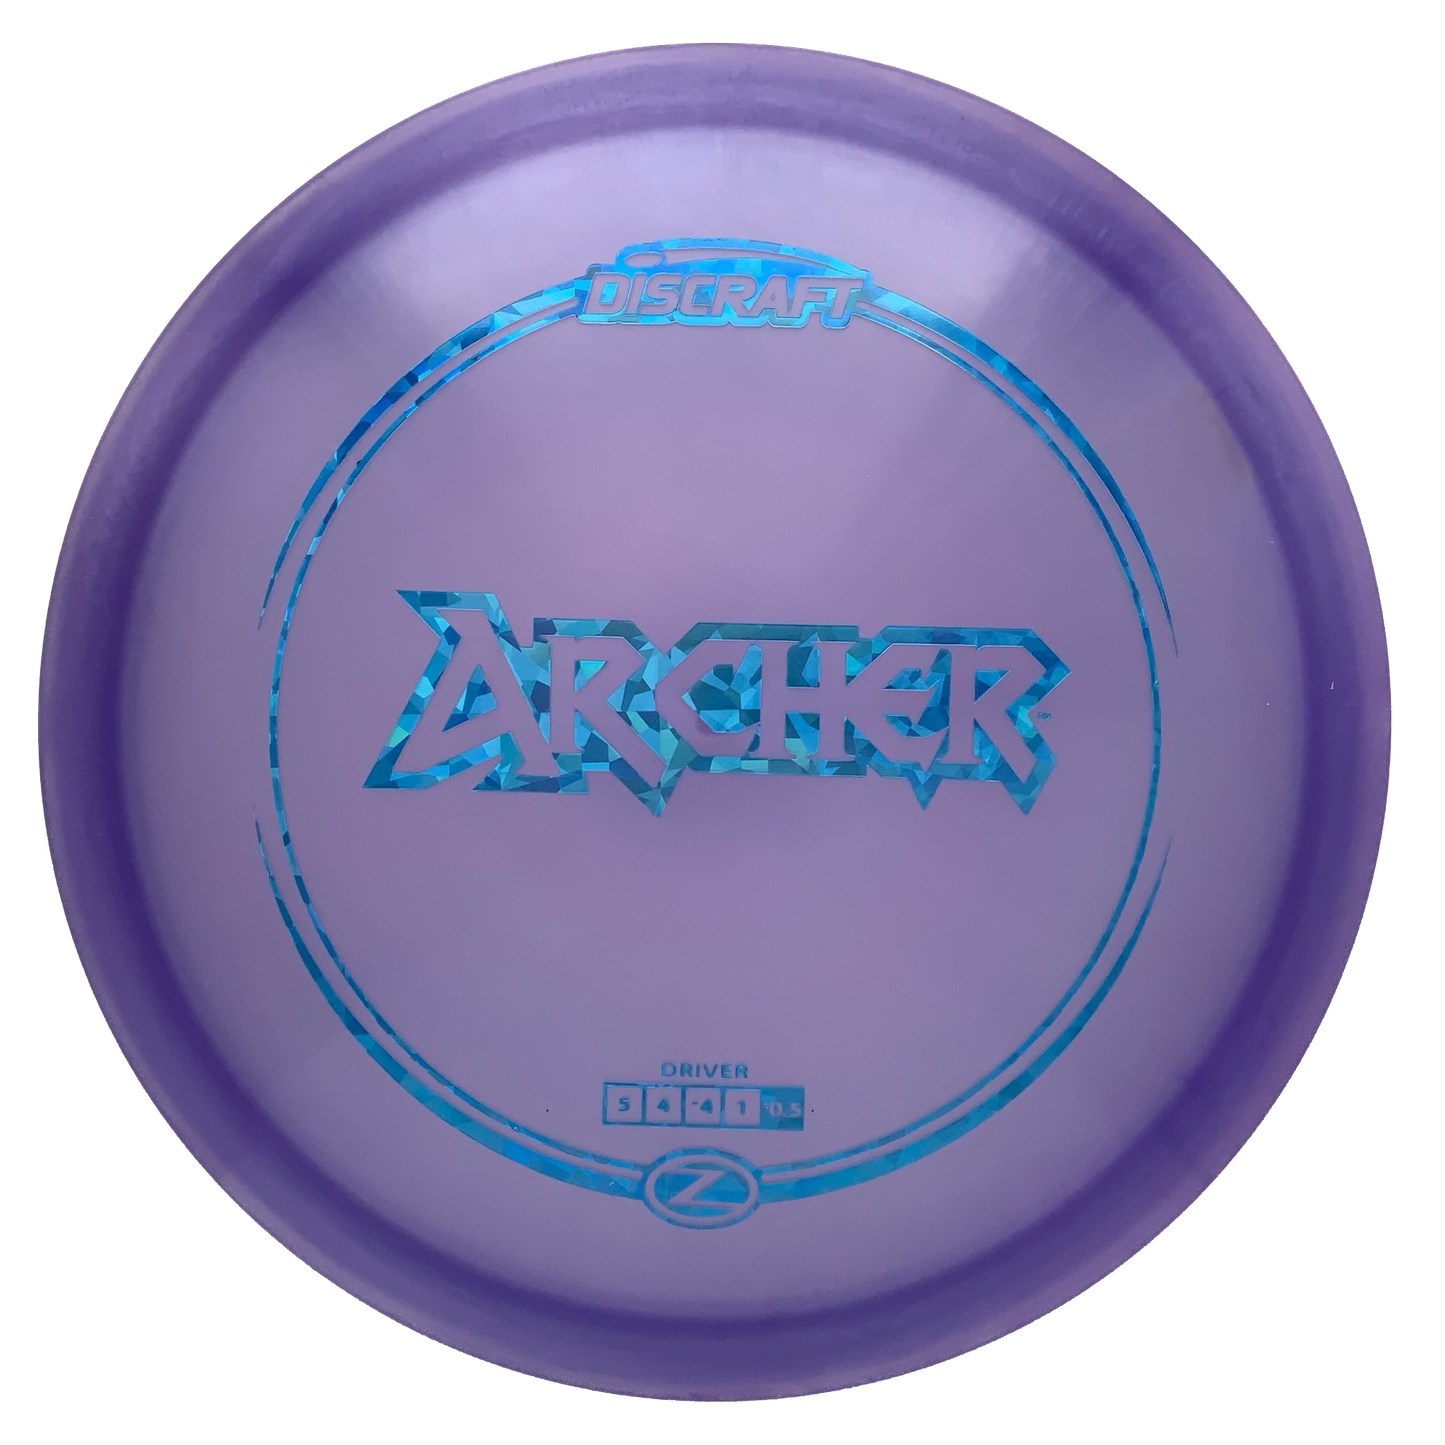 Discraft Archer - Astro Discs TX - Houston Disc Golf